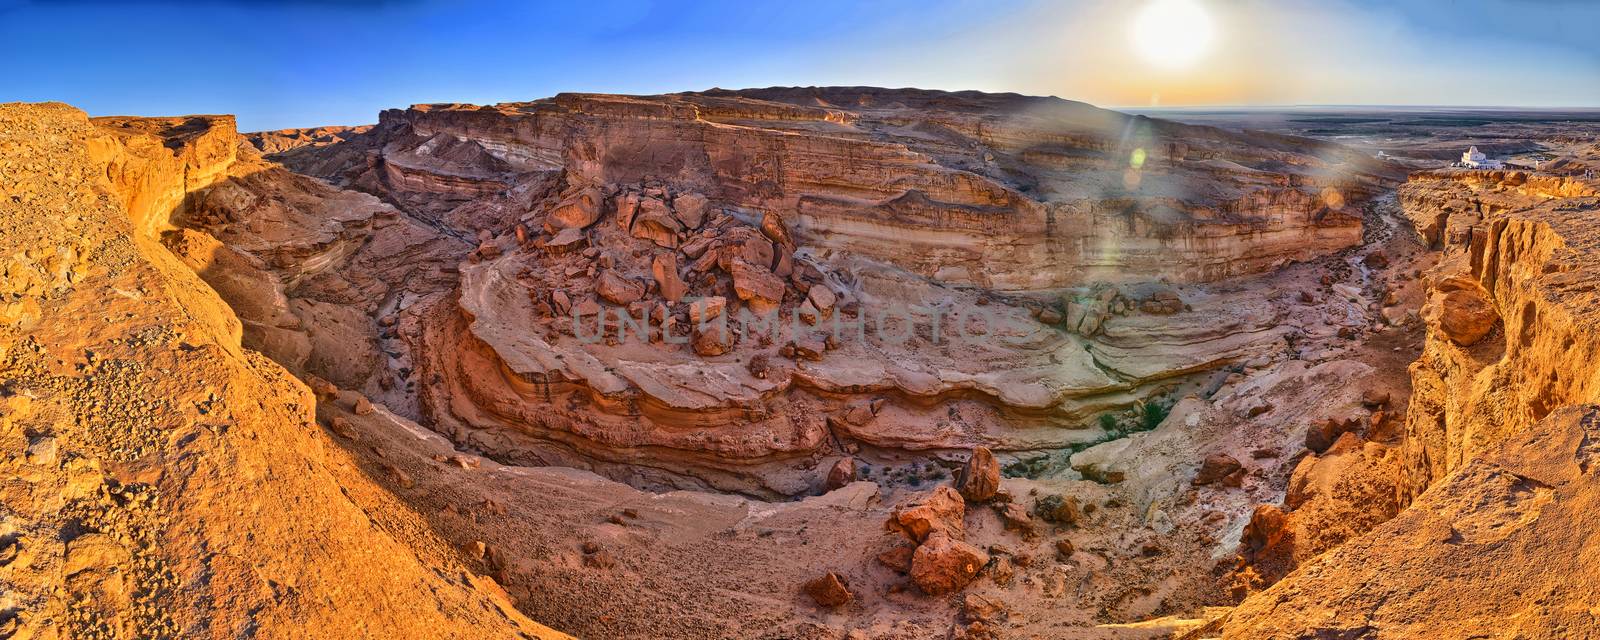 Tamerza canyon, Star Wars, Sahara desert, Tunisia, Africa by Eagle2308